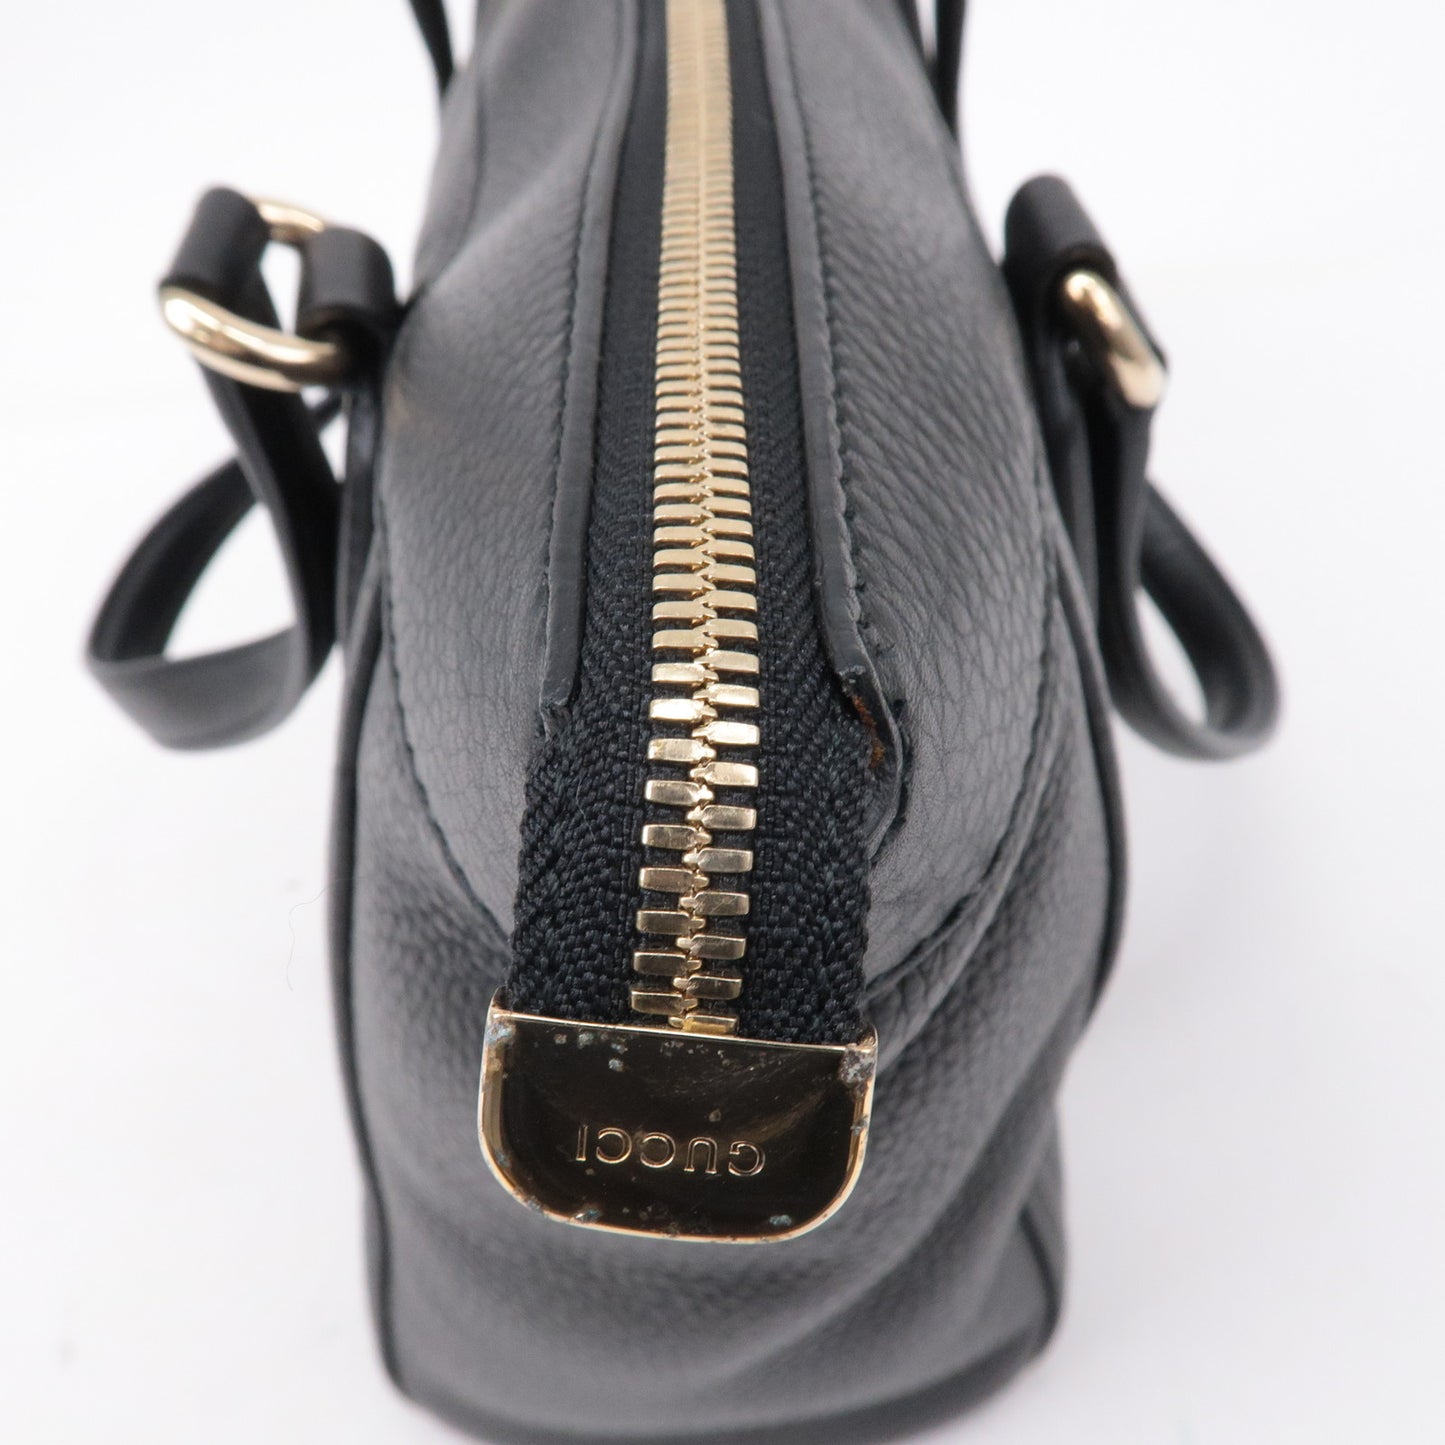 GUCCI SOHO Interlocking Leather Tote Bag Noir Black 282307